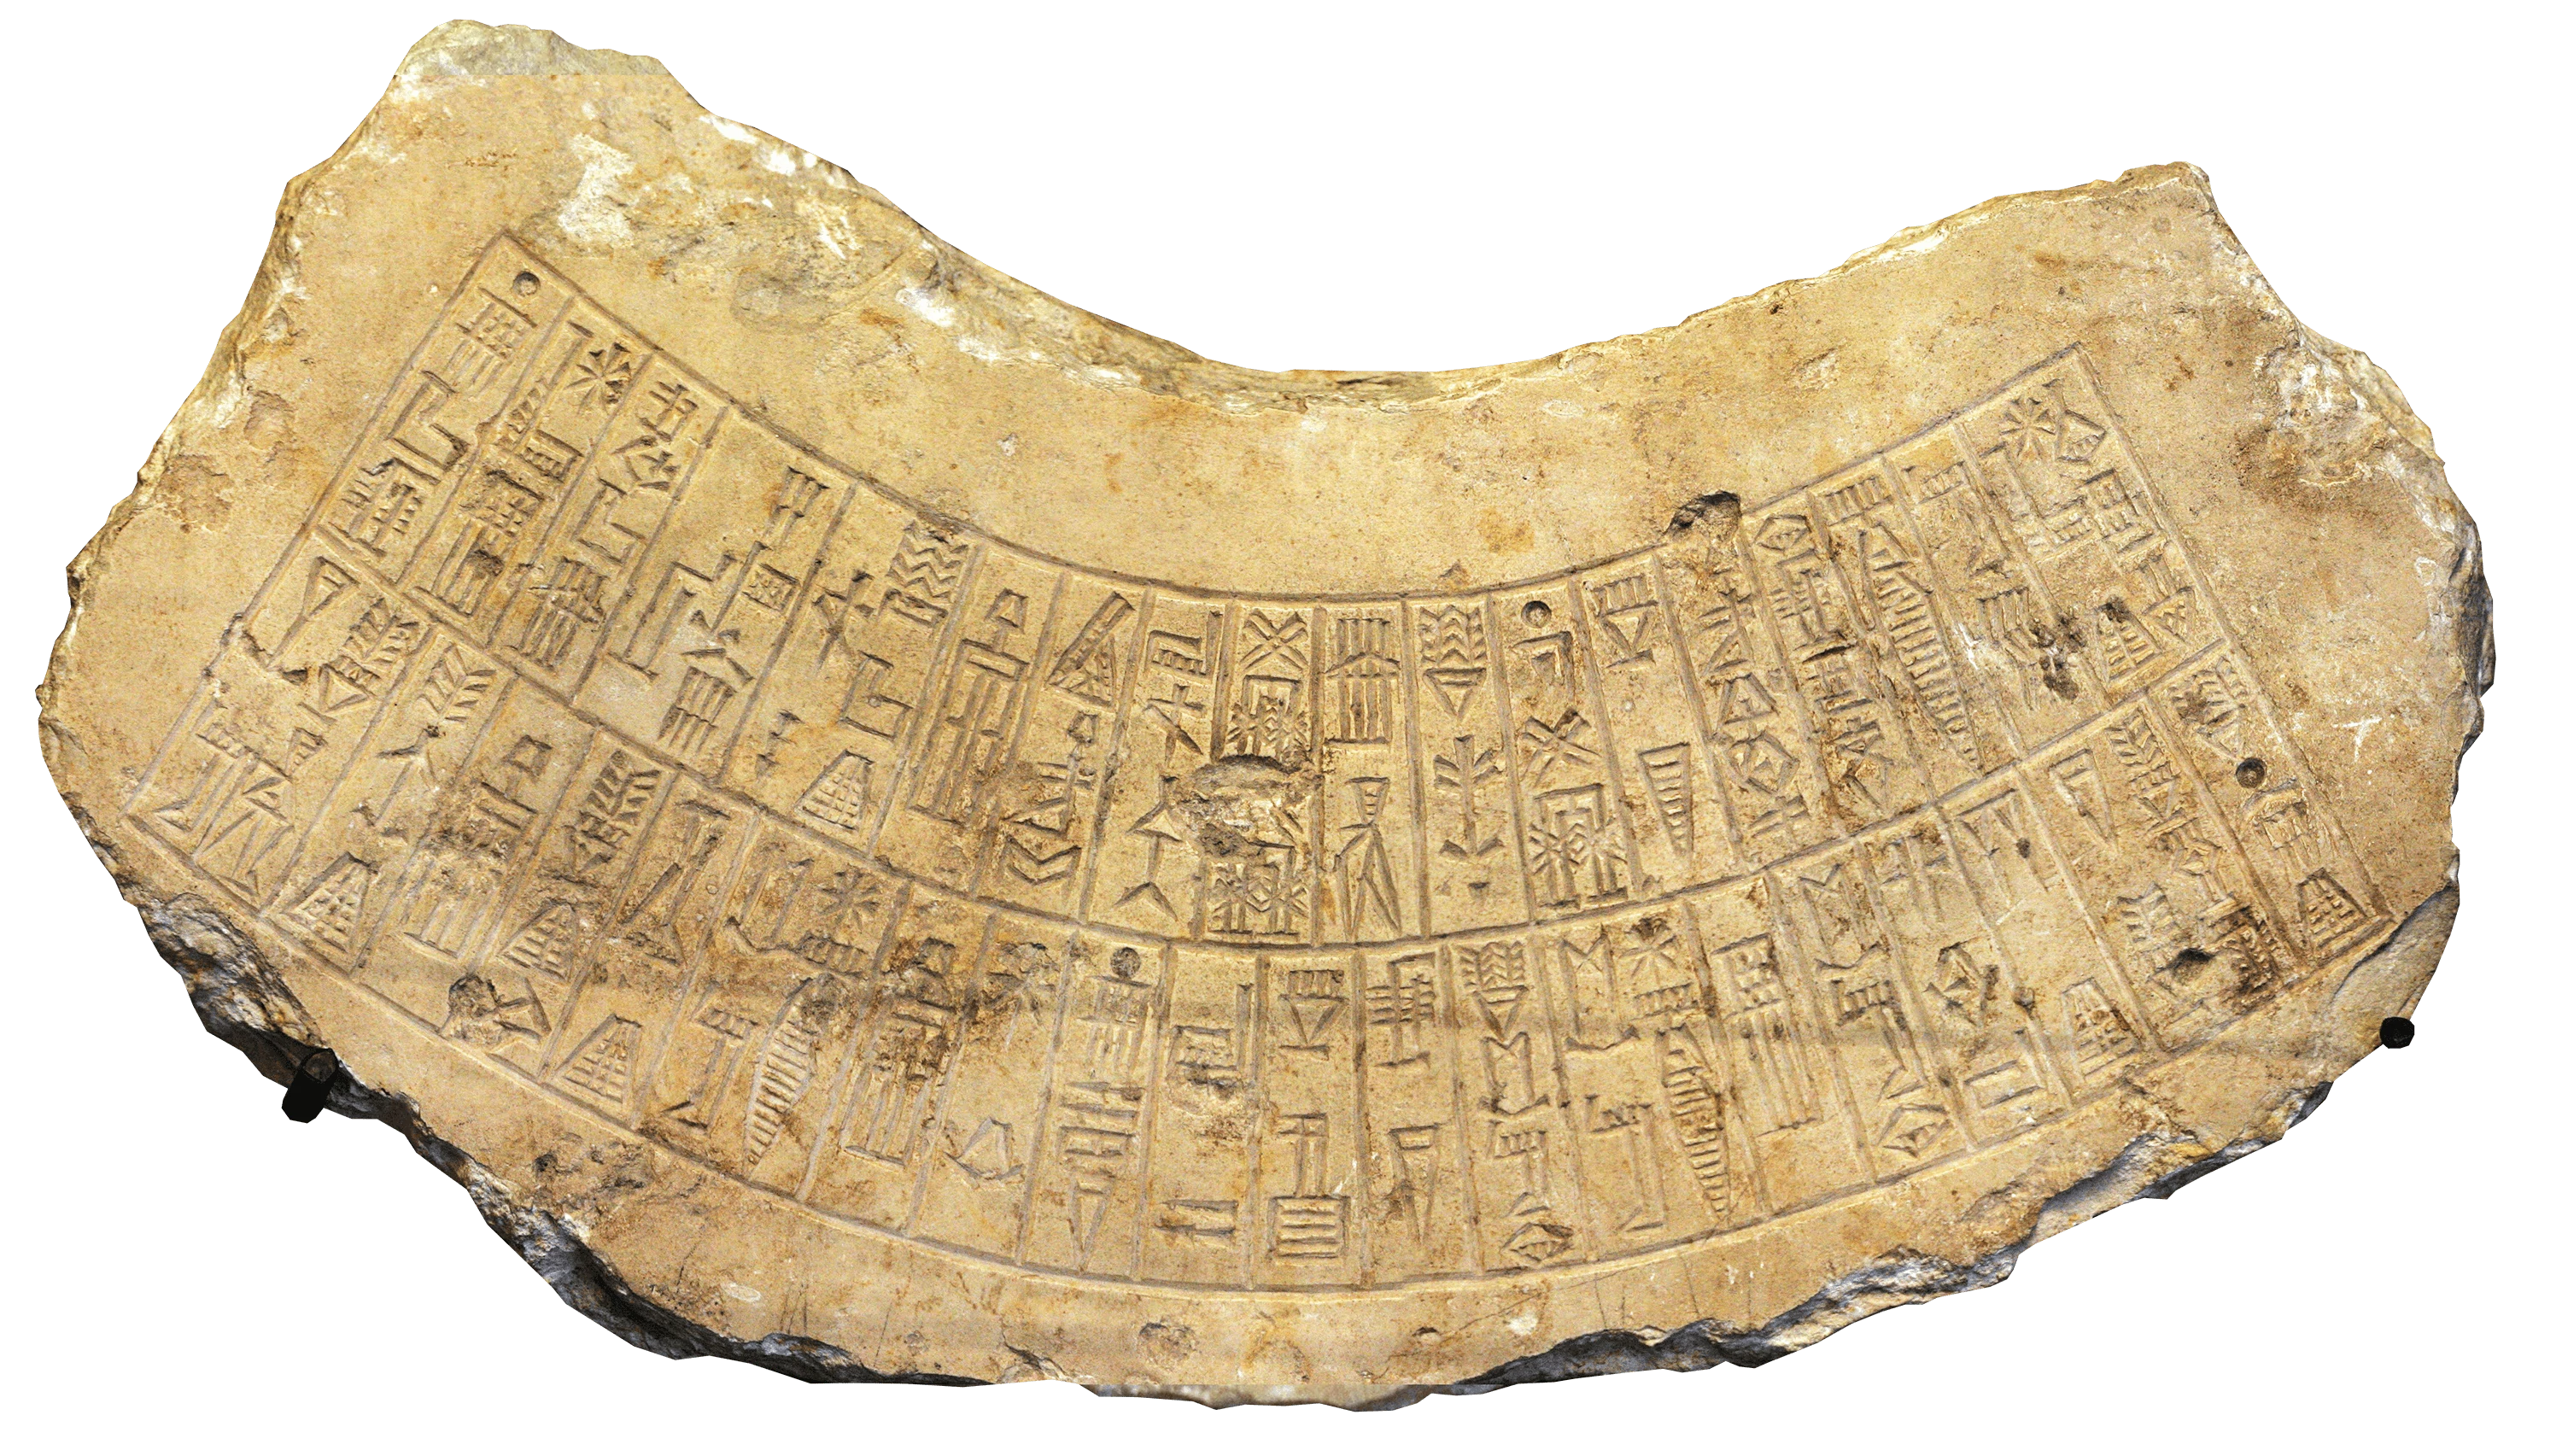 Inscription by Naram-Sin: Temple Construction, Mesopotamia